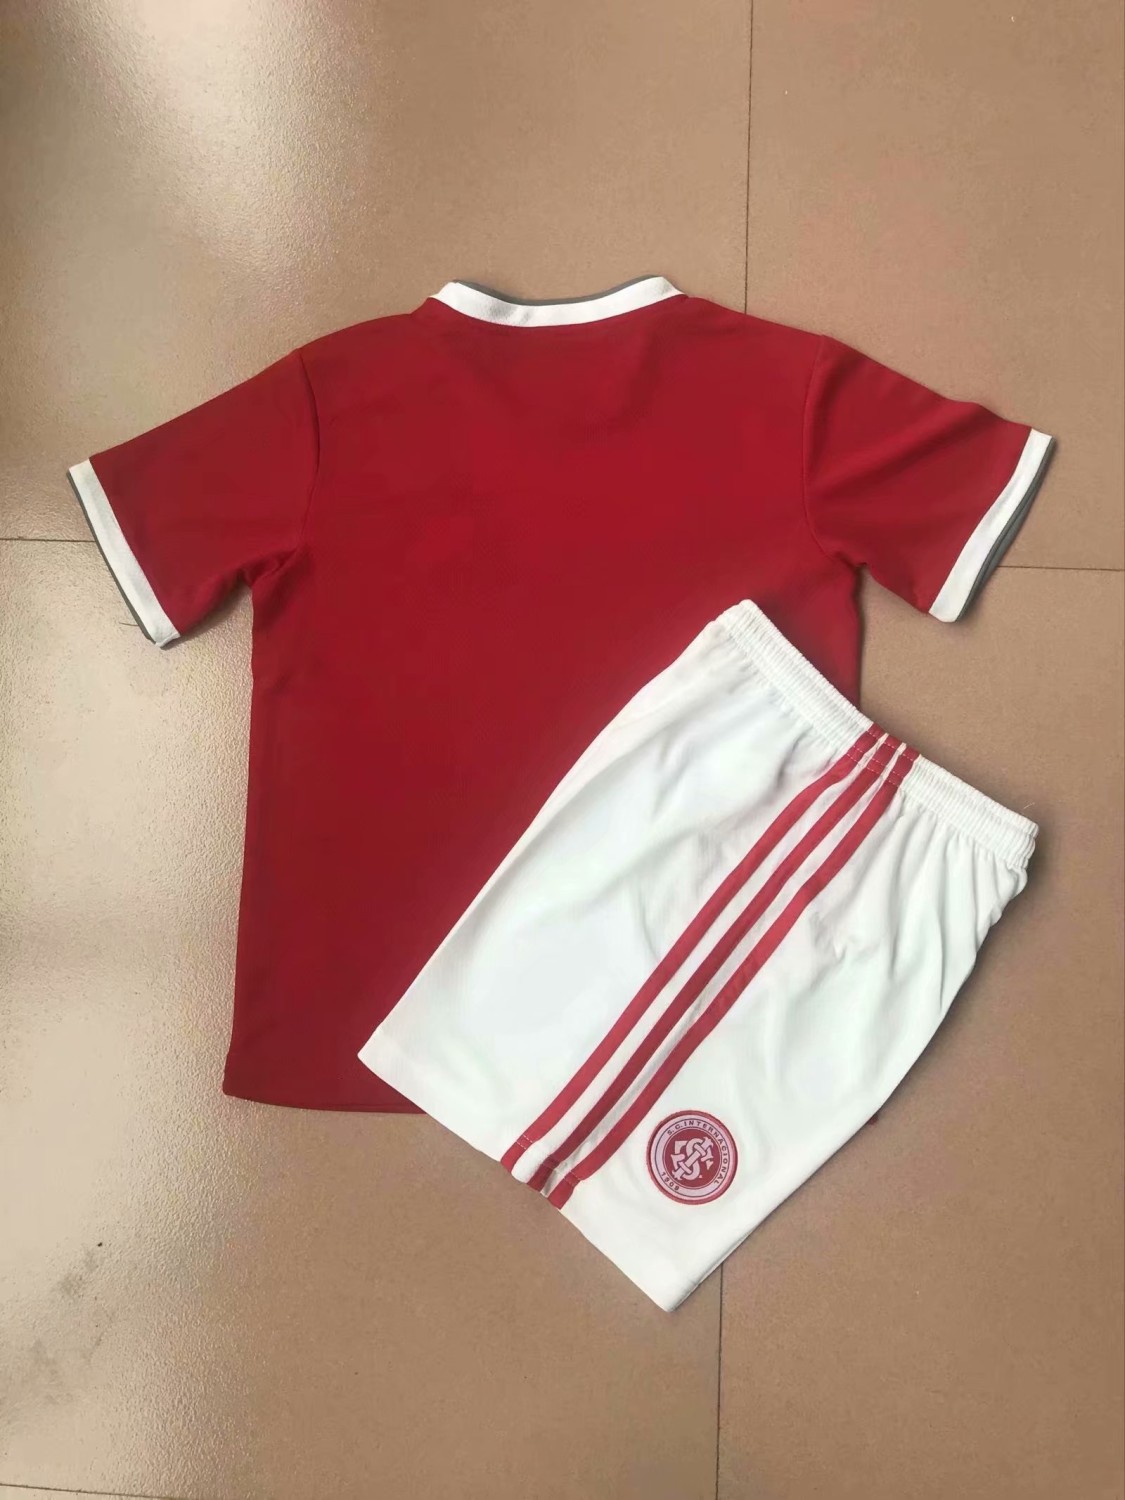 20-21 Children Brazil International home soccer uniforms football kits